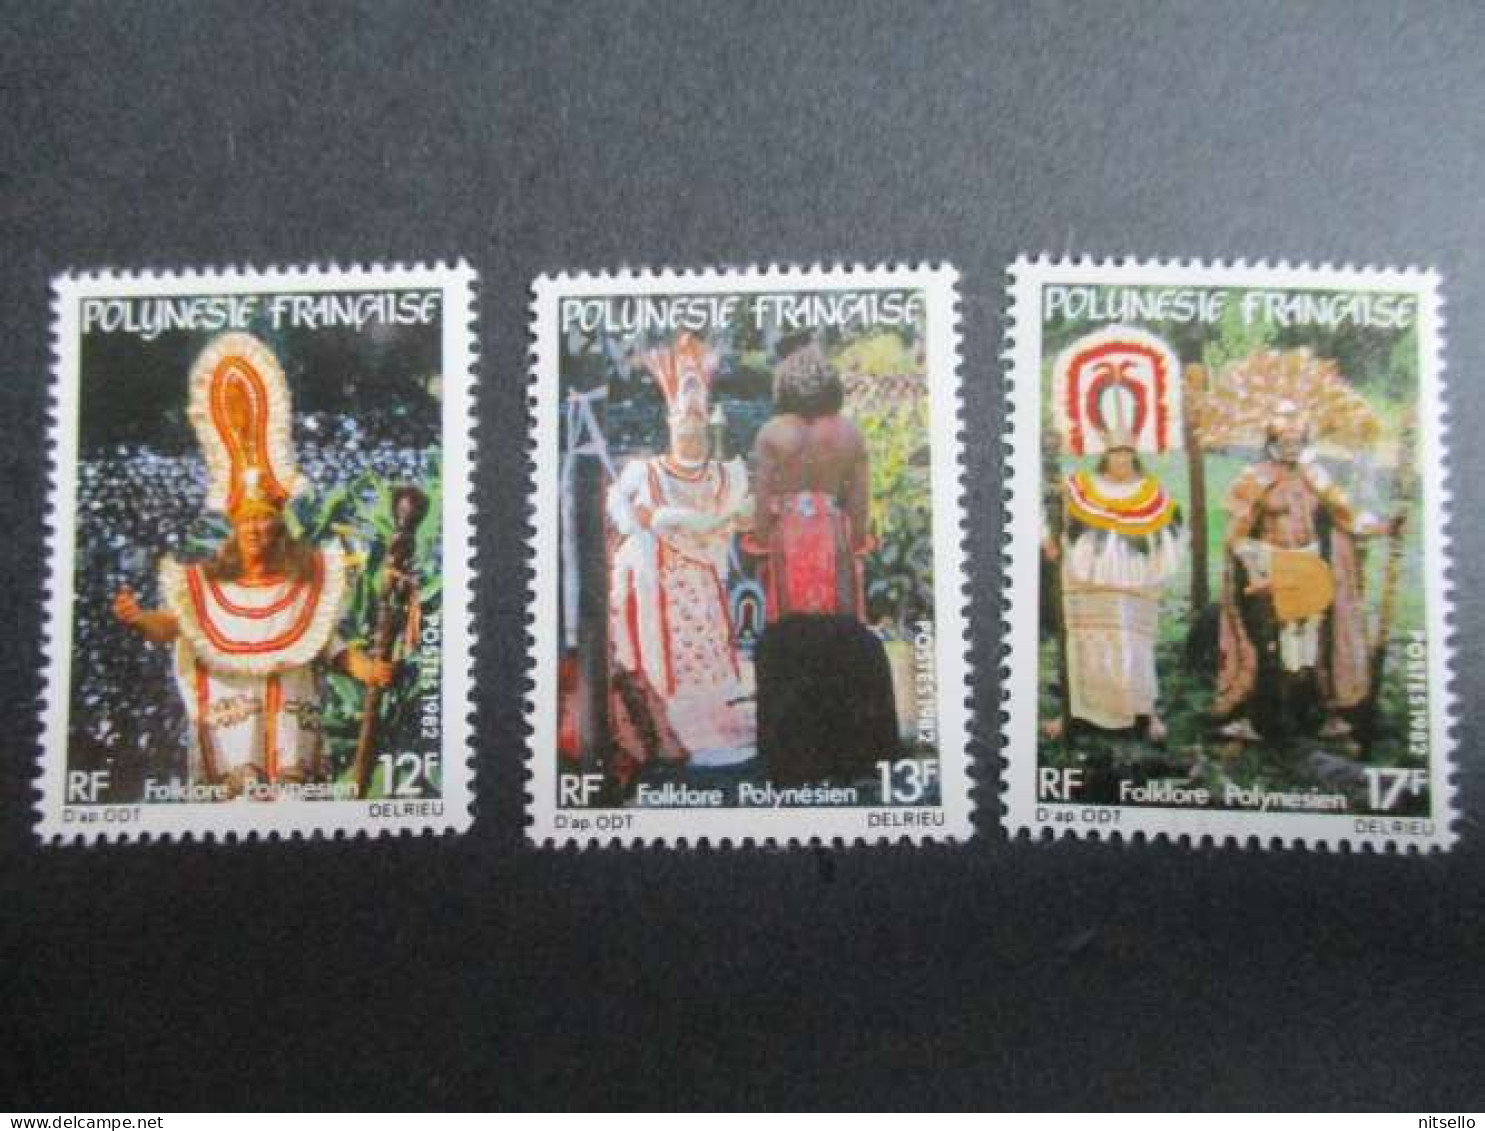 LOTE 2202A ///  (C055)  POLINESIA FRANCESA  - YVERT Nº:  181/83 ** 1982 ¡¡¡ OFERTA - LIQUIDATION - JE LIQUIDE !!! - Used Stamps